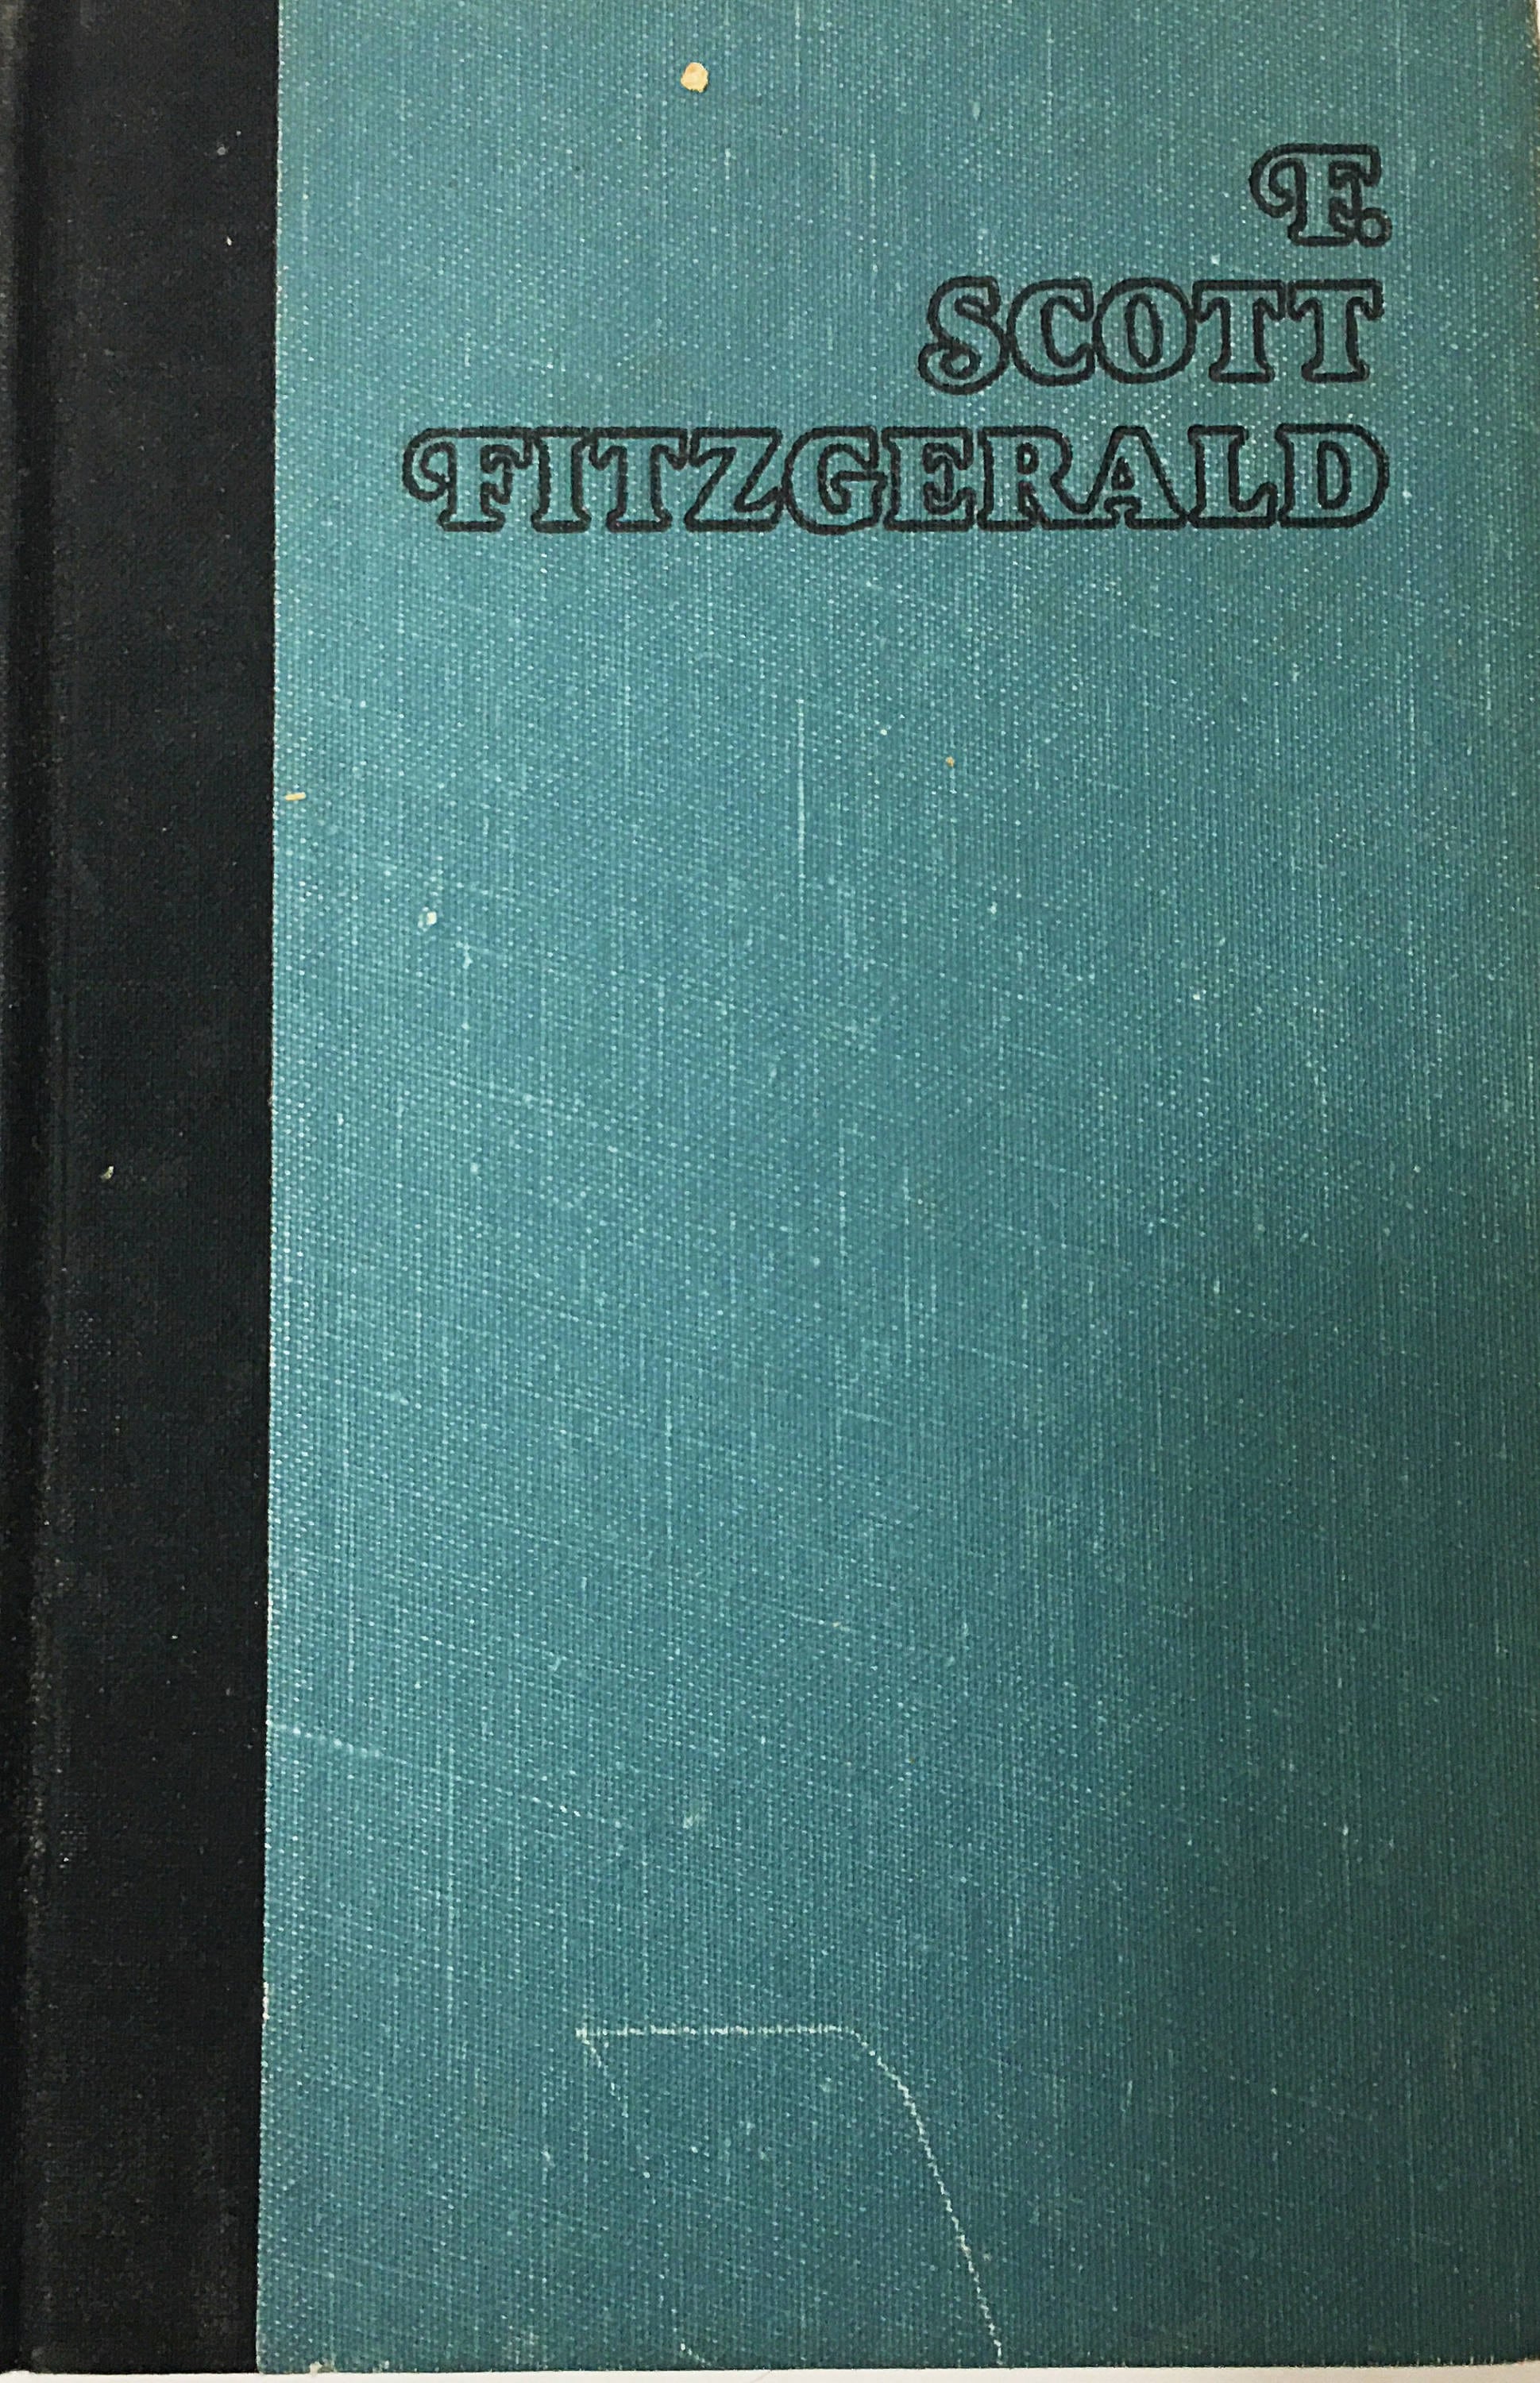 Tender is the Night book circa 1962. F. Scott Fitzgerald. Scribner, NY. Beautiful work of classic American literature!